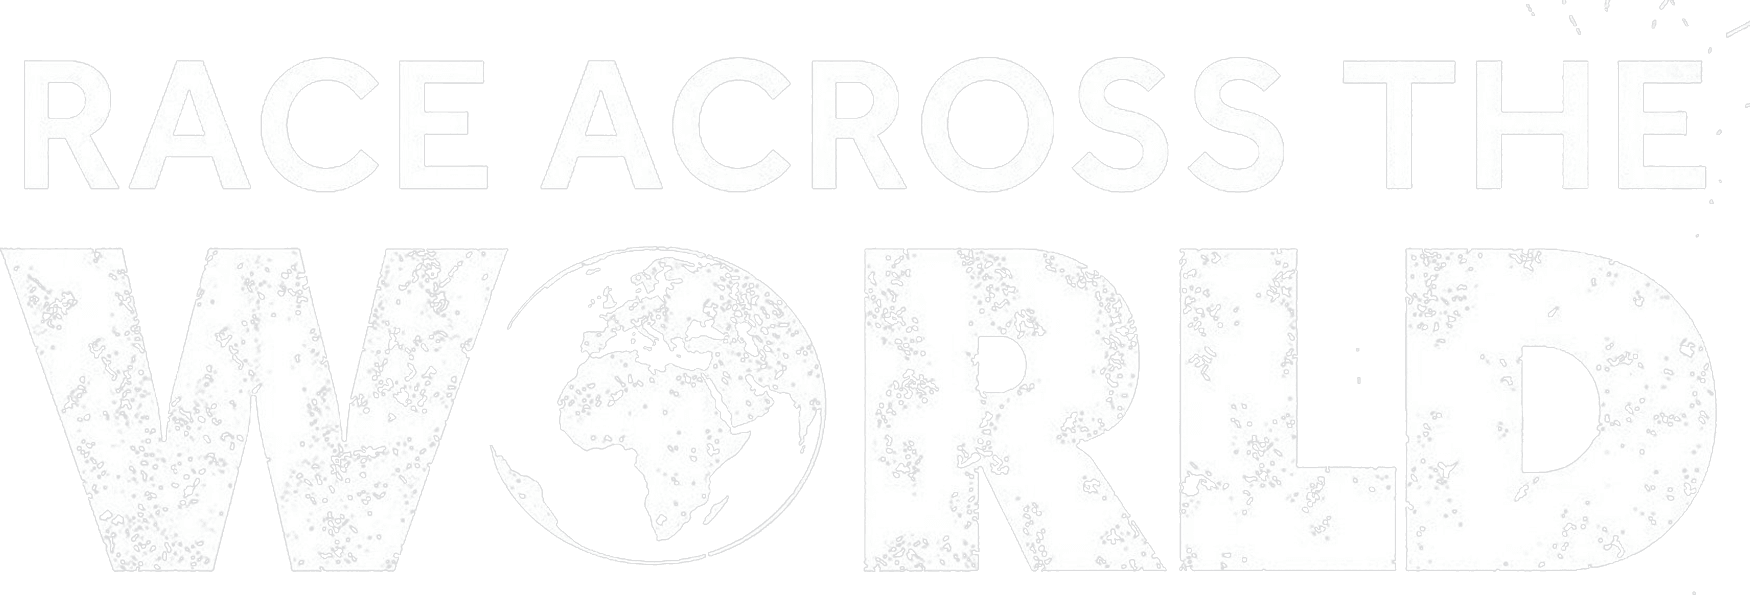 Race Across the World logo